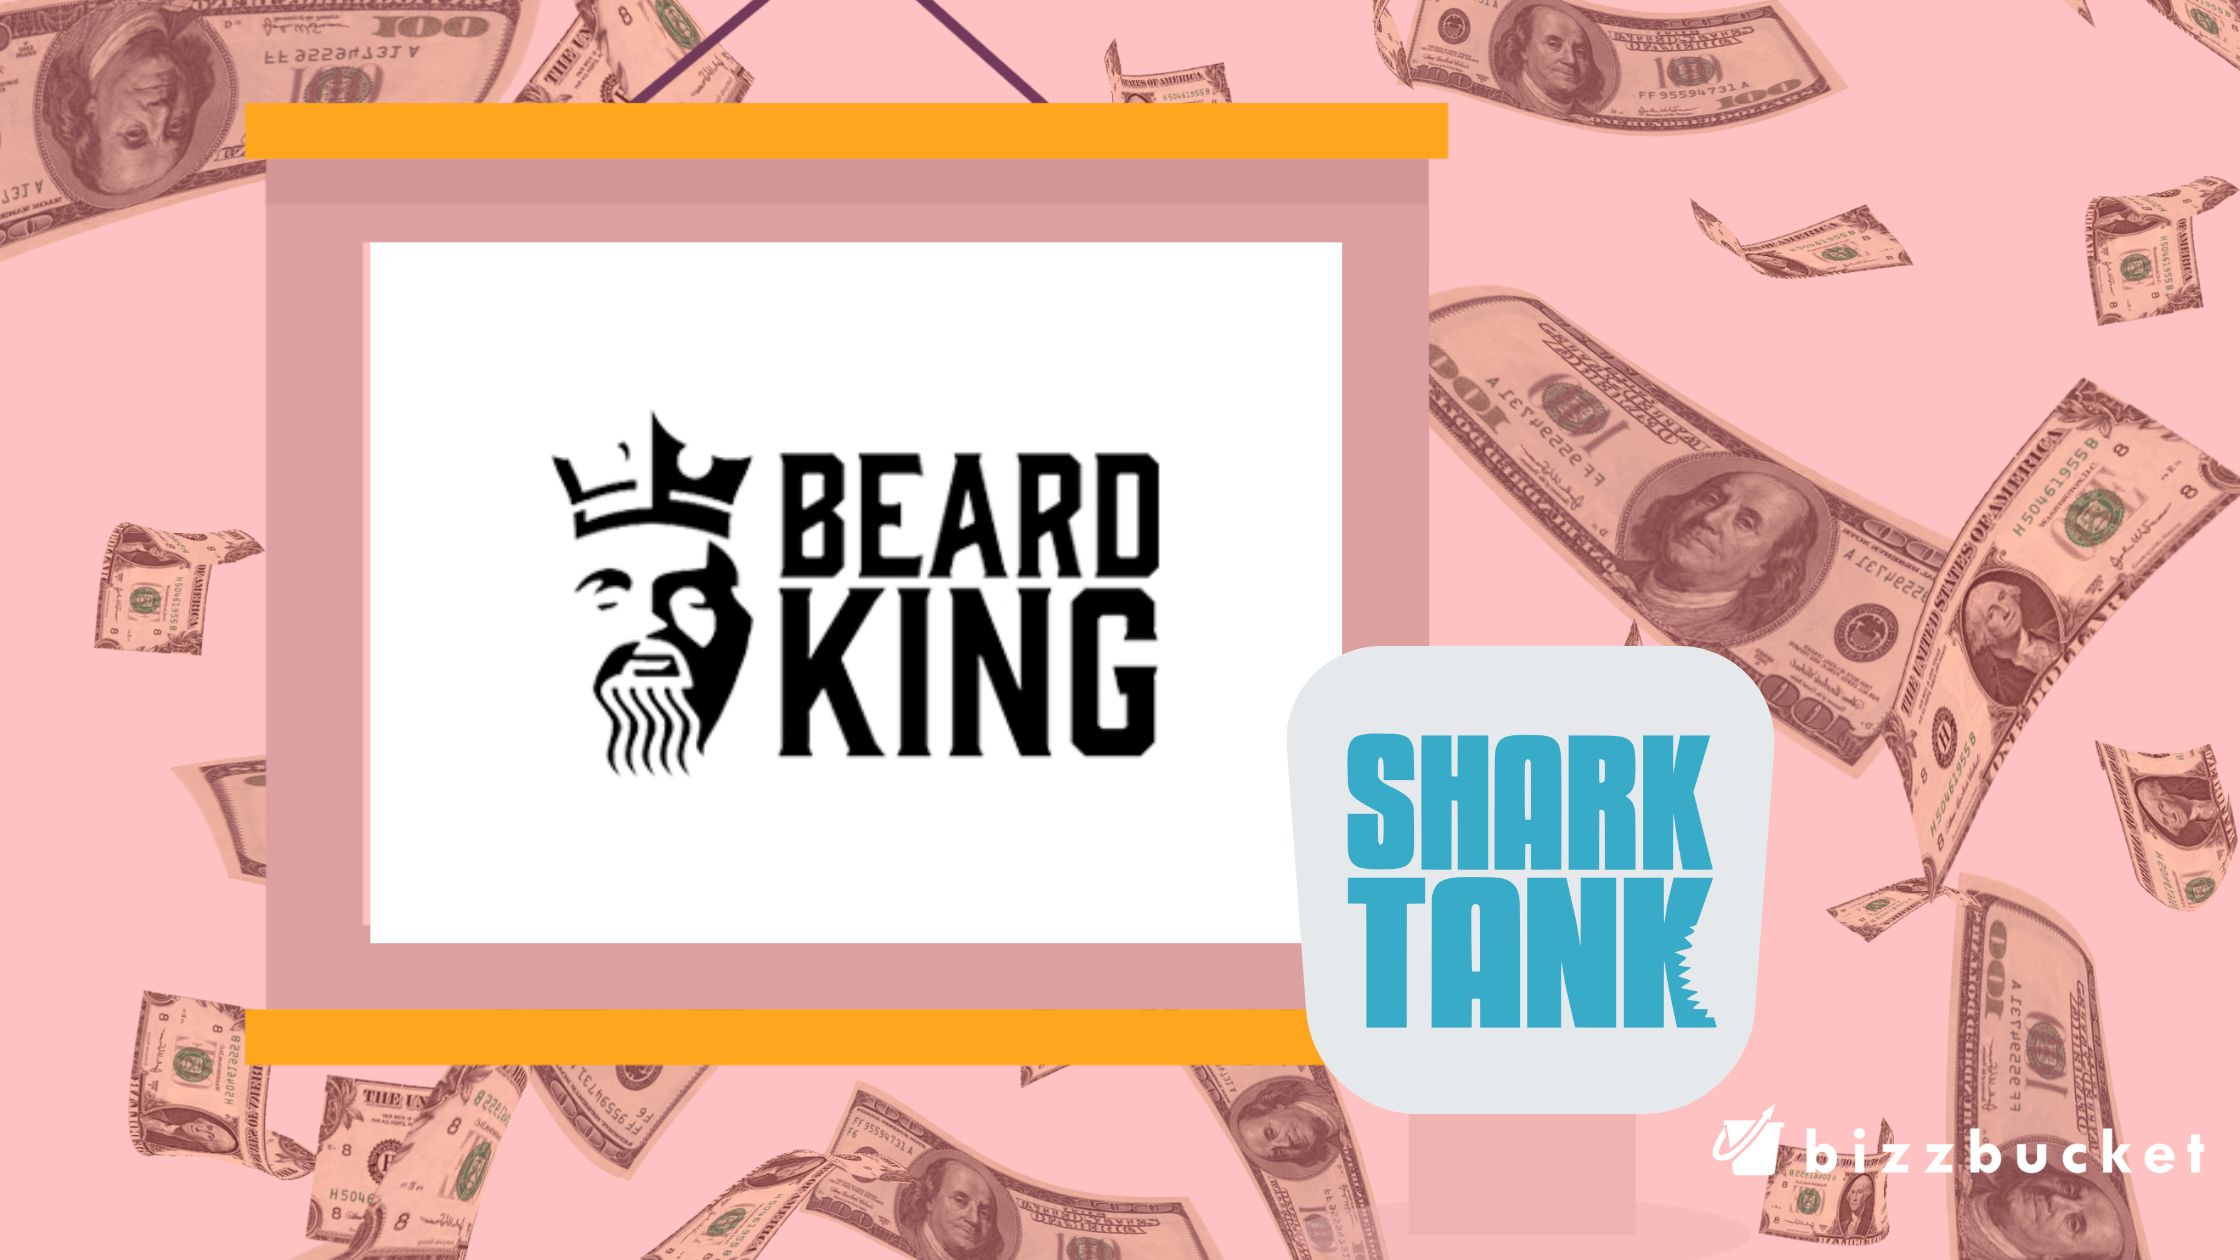 Beard King after Shark Tank